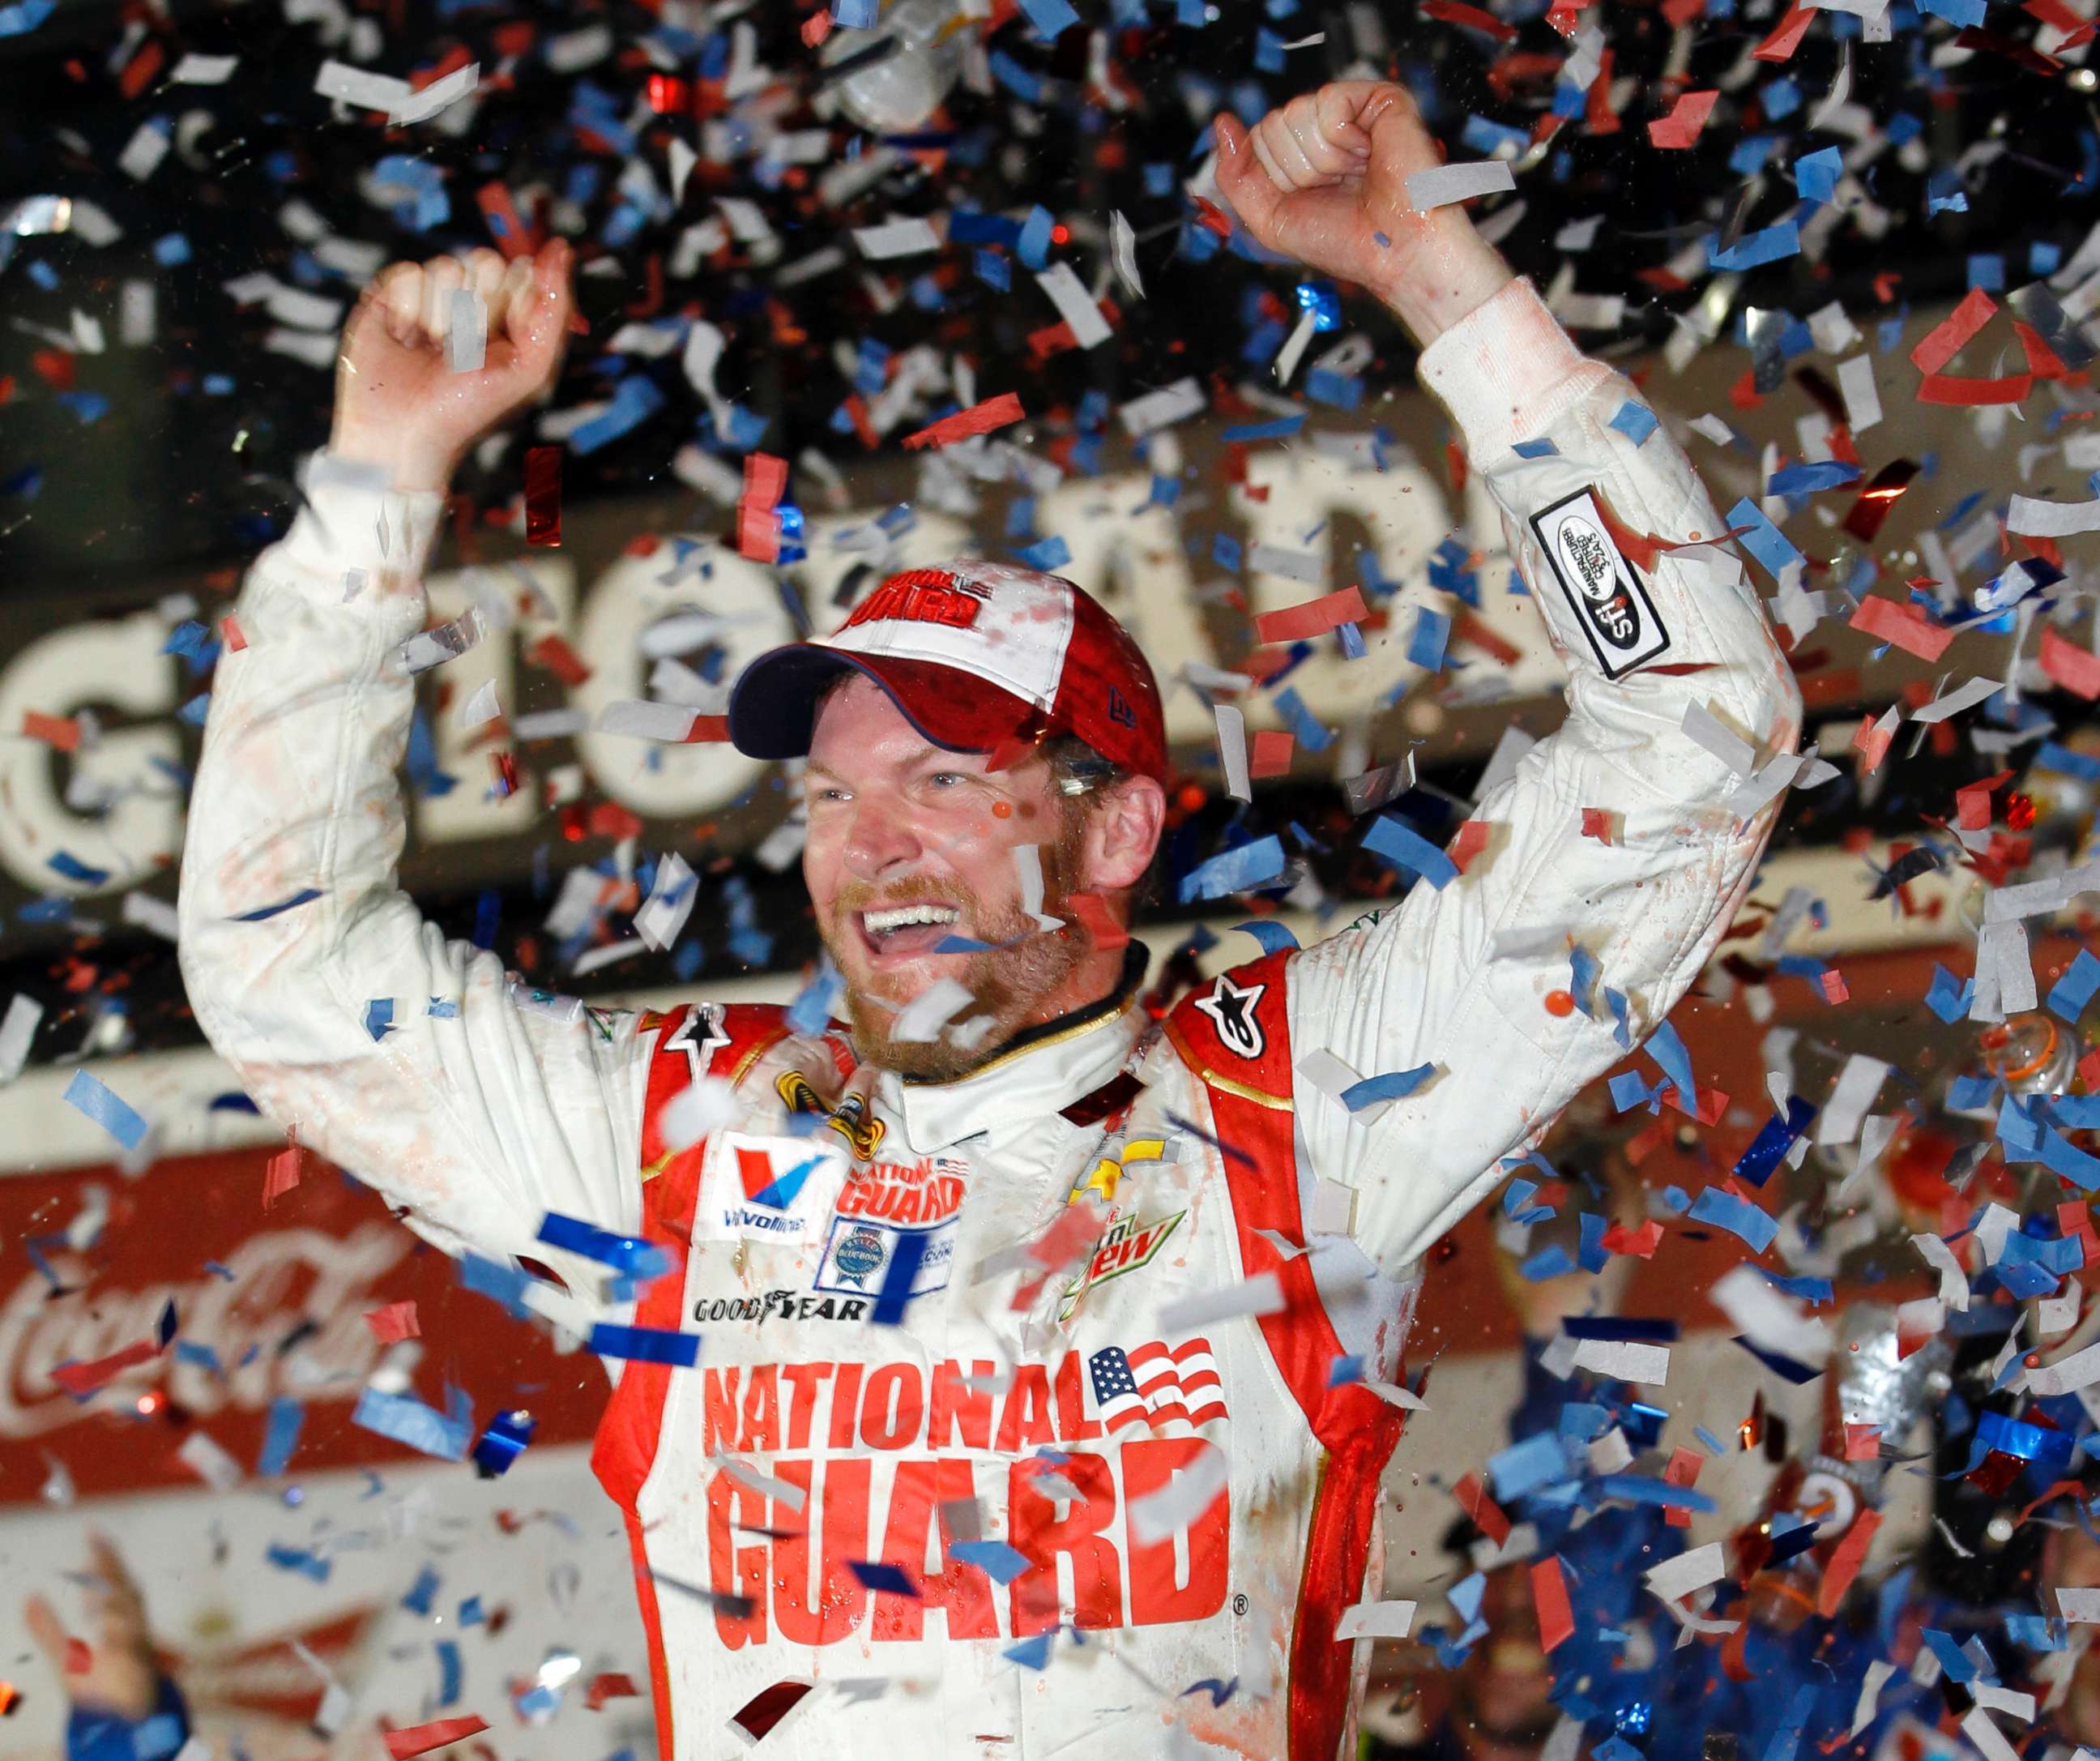 PHOTO: Dale Earnhardt Jr. celebrates in Victory Lane after winning the NASCAR Daytona 500 Sprint Cup series auto race at Daytona International Speedway in Daytona Beach, Fla., Feb. 23, 2014.